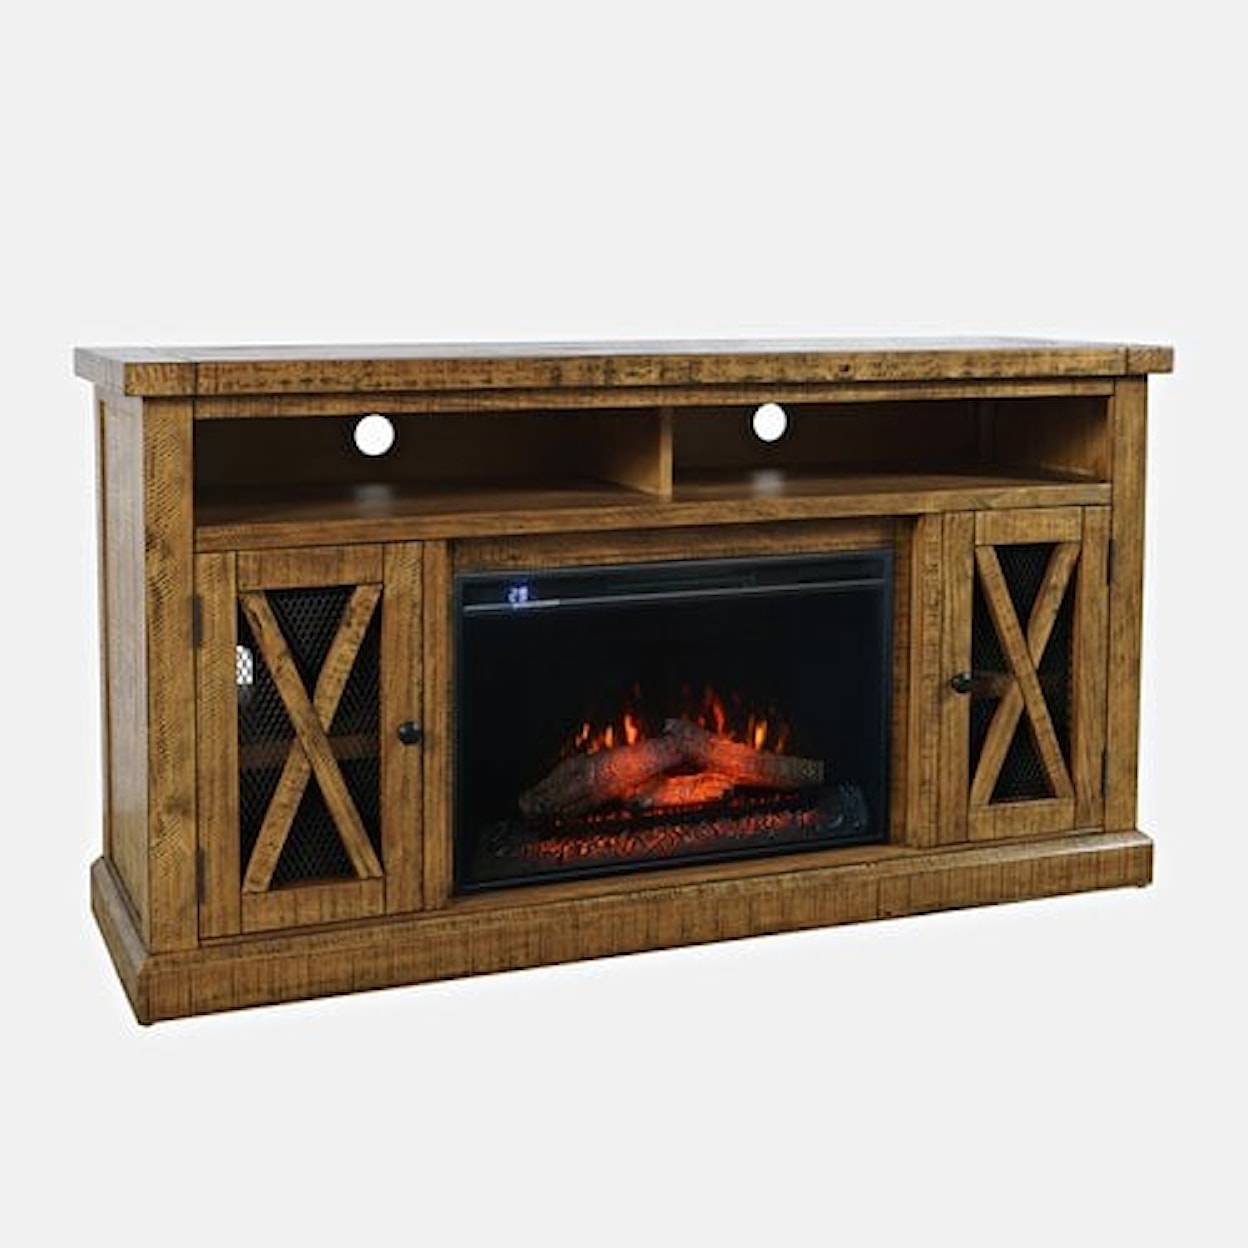 VFM Signature Telluride Fireplace with Logs